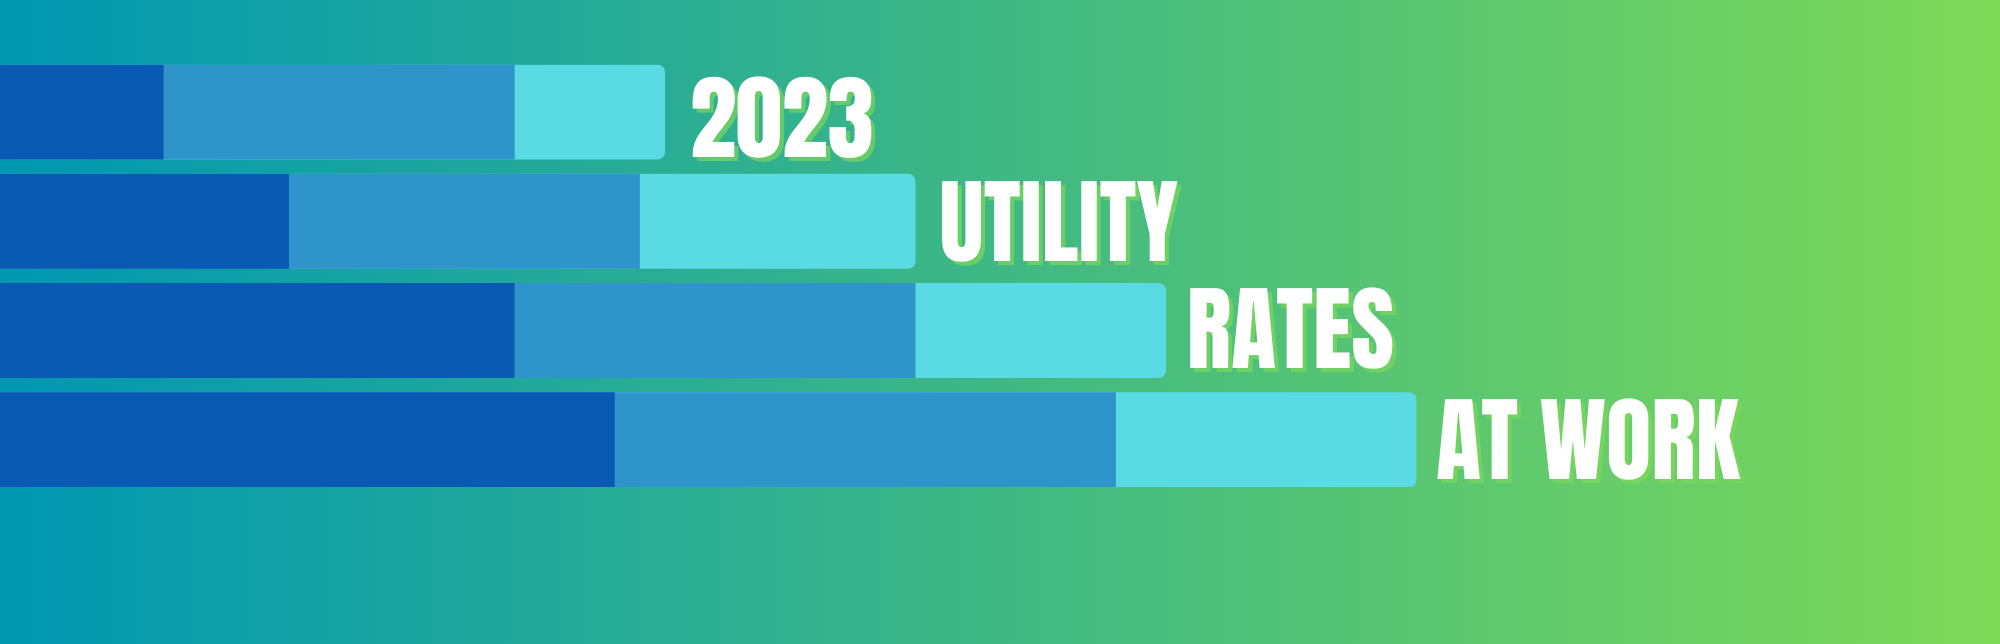 2023 Utility Rates